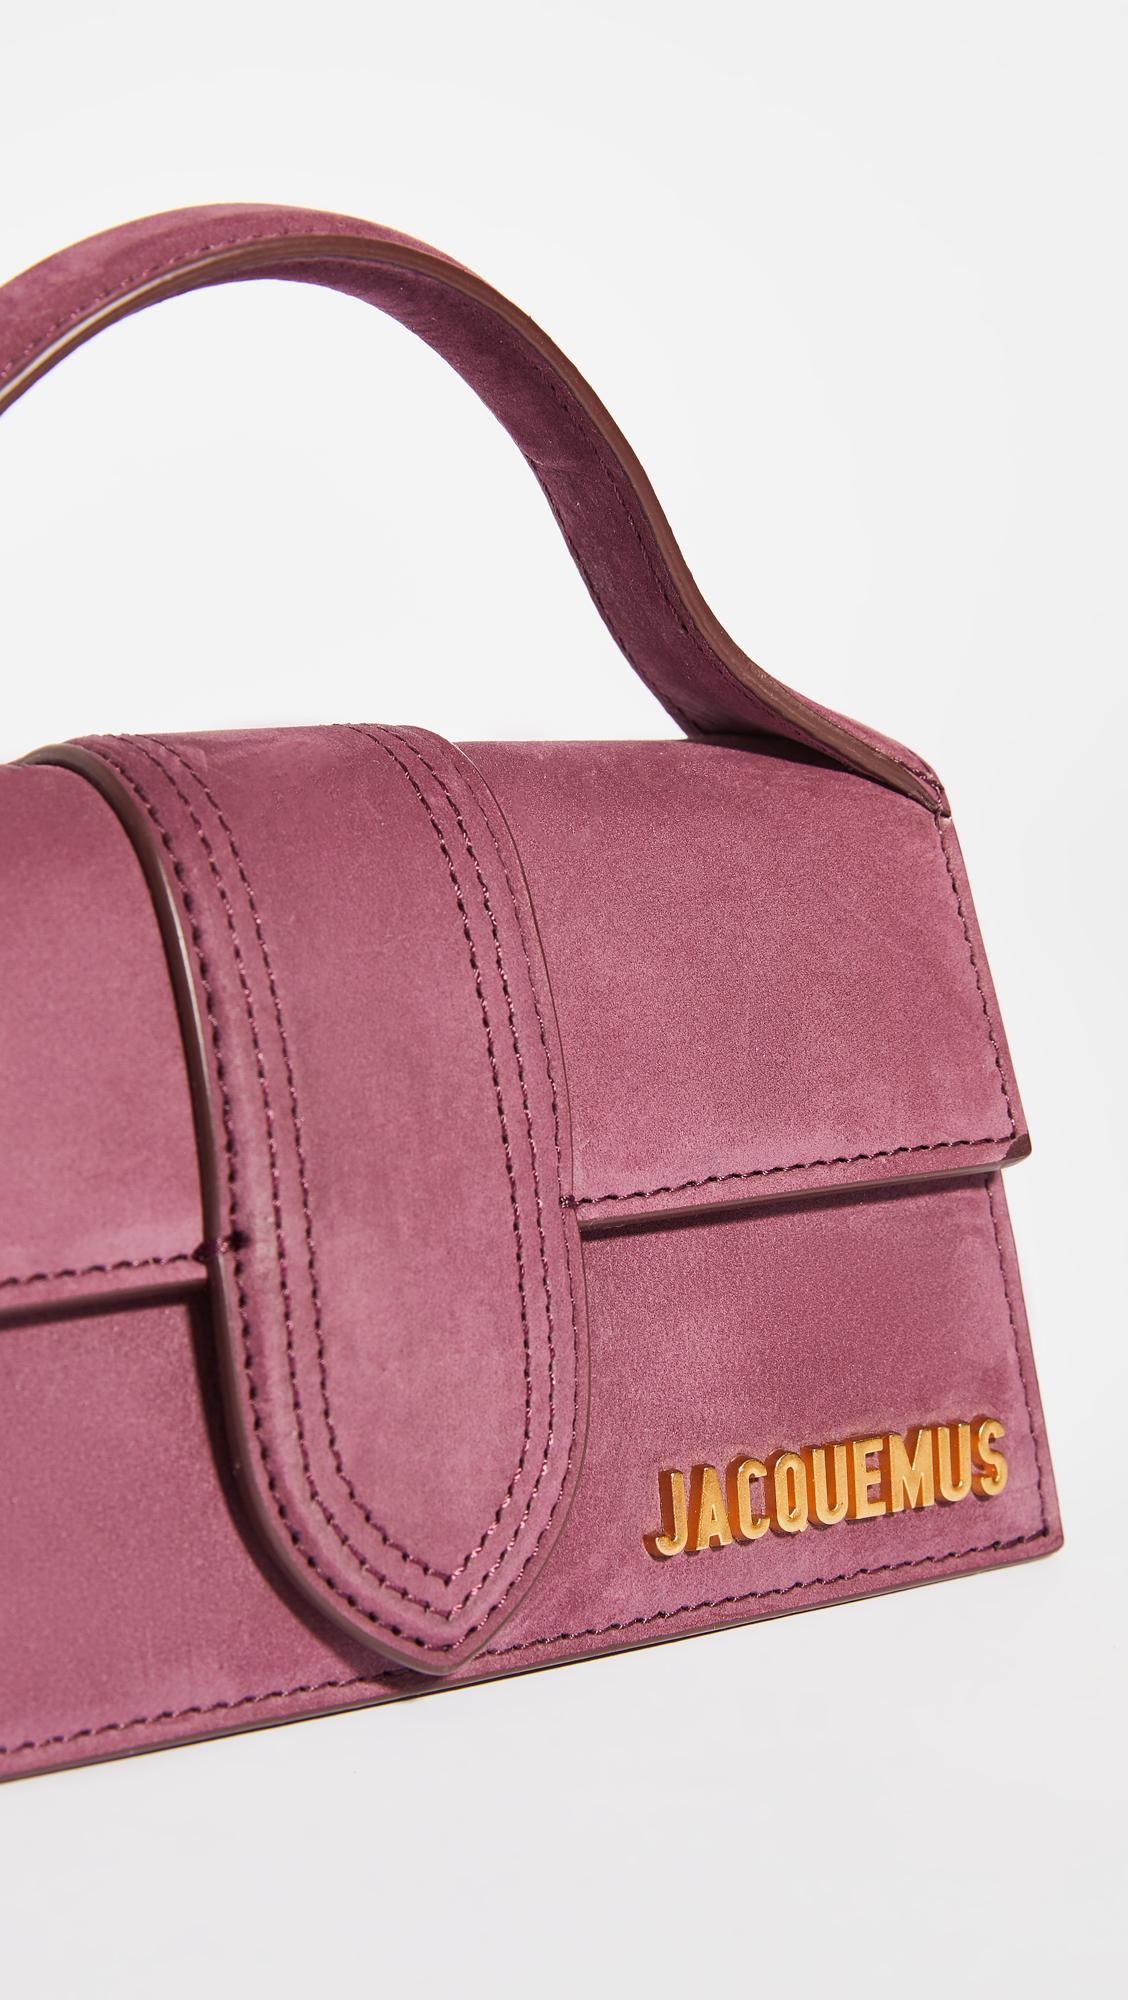 Jacquemus Bambino' Suede Top Handle Bag in Dark Purple (Purple) | Lyst